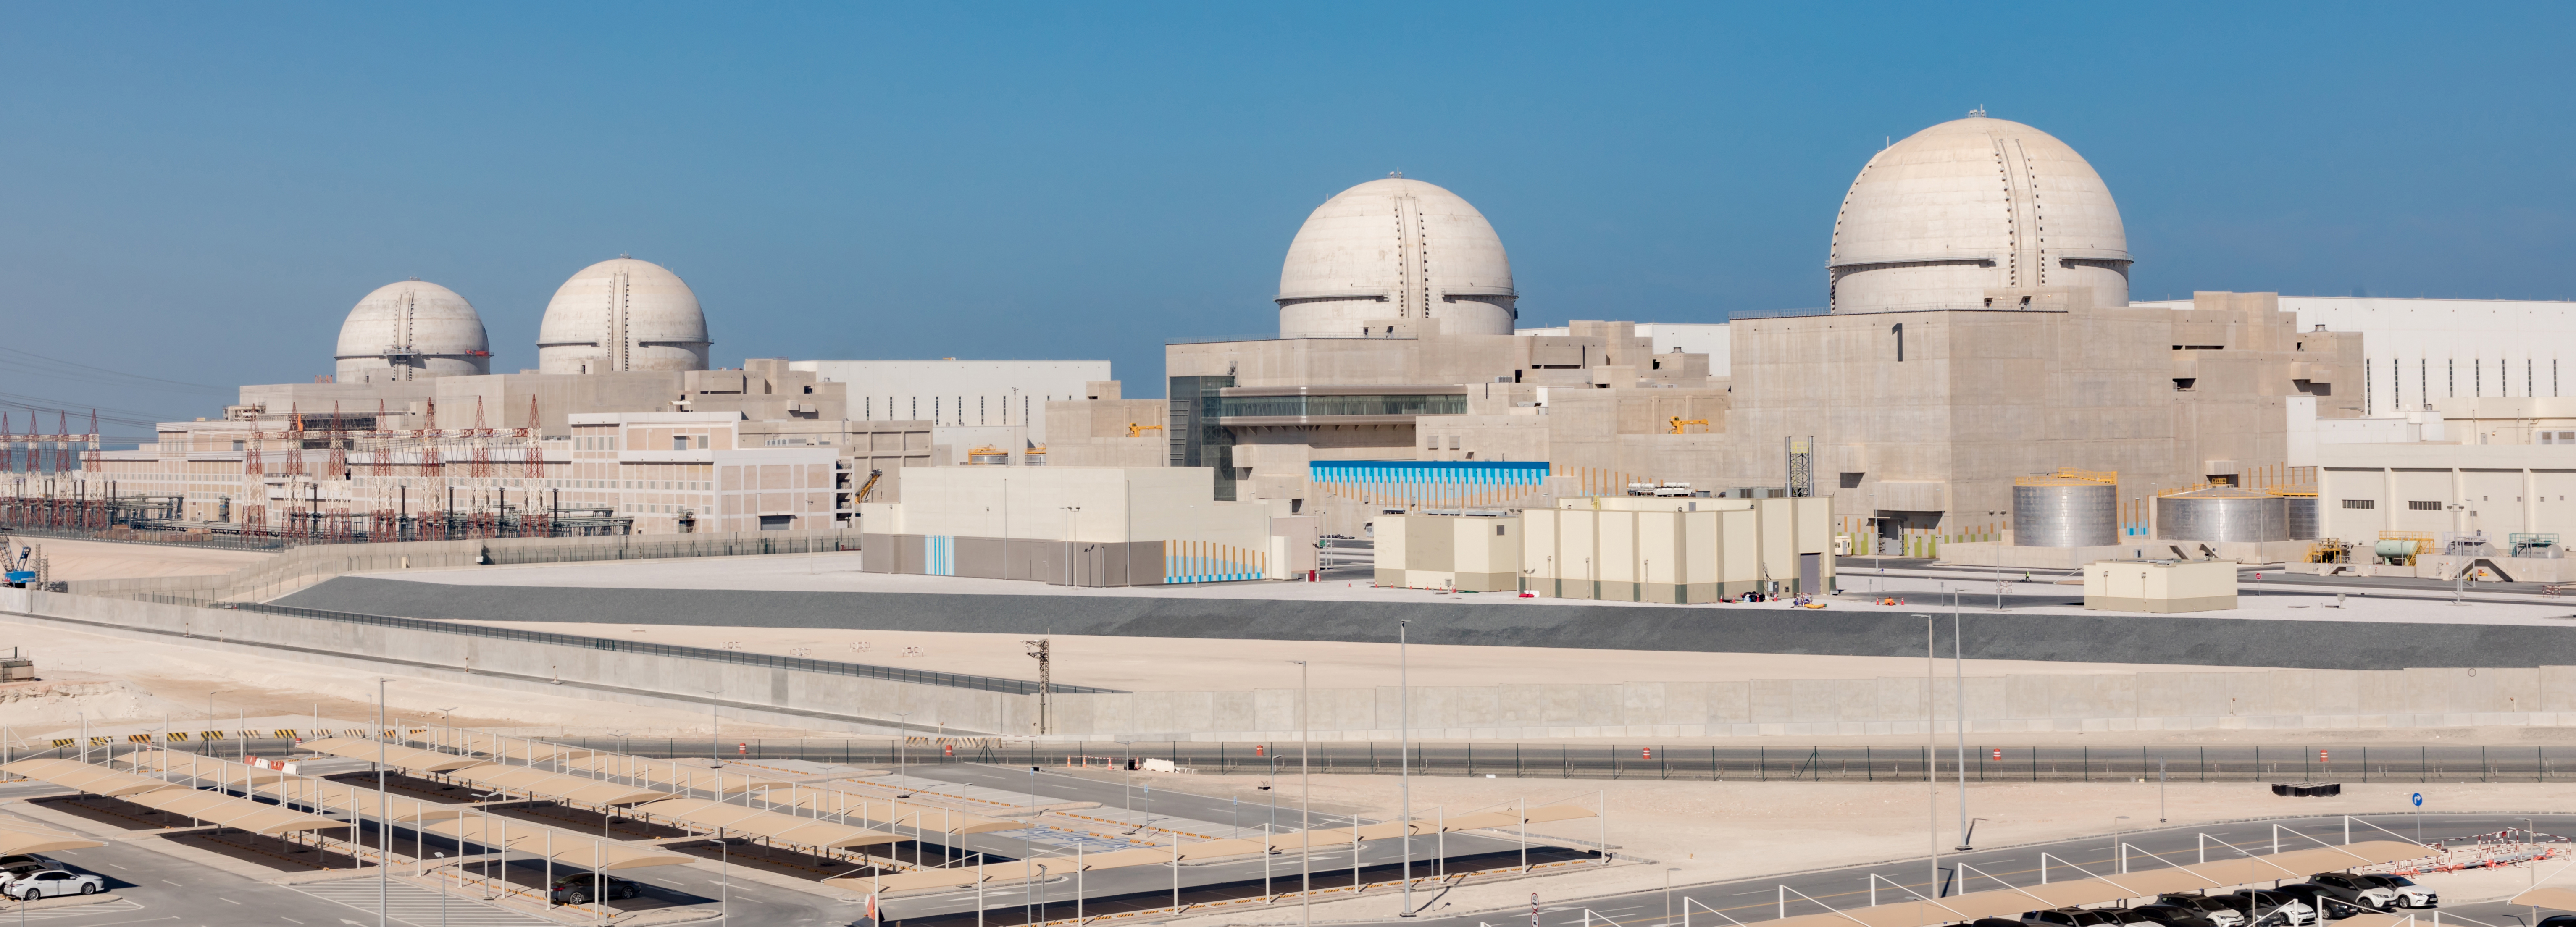 Emirates Nuclear Technology Center (ENTC)